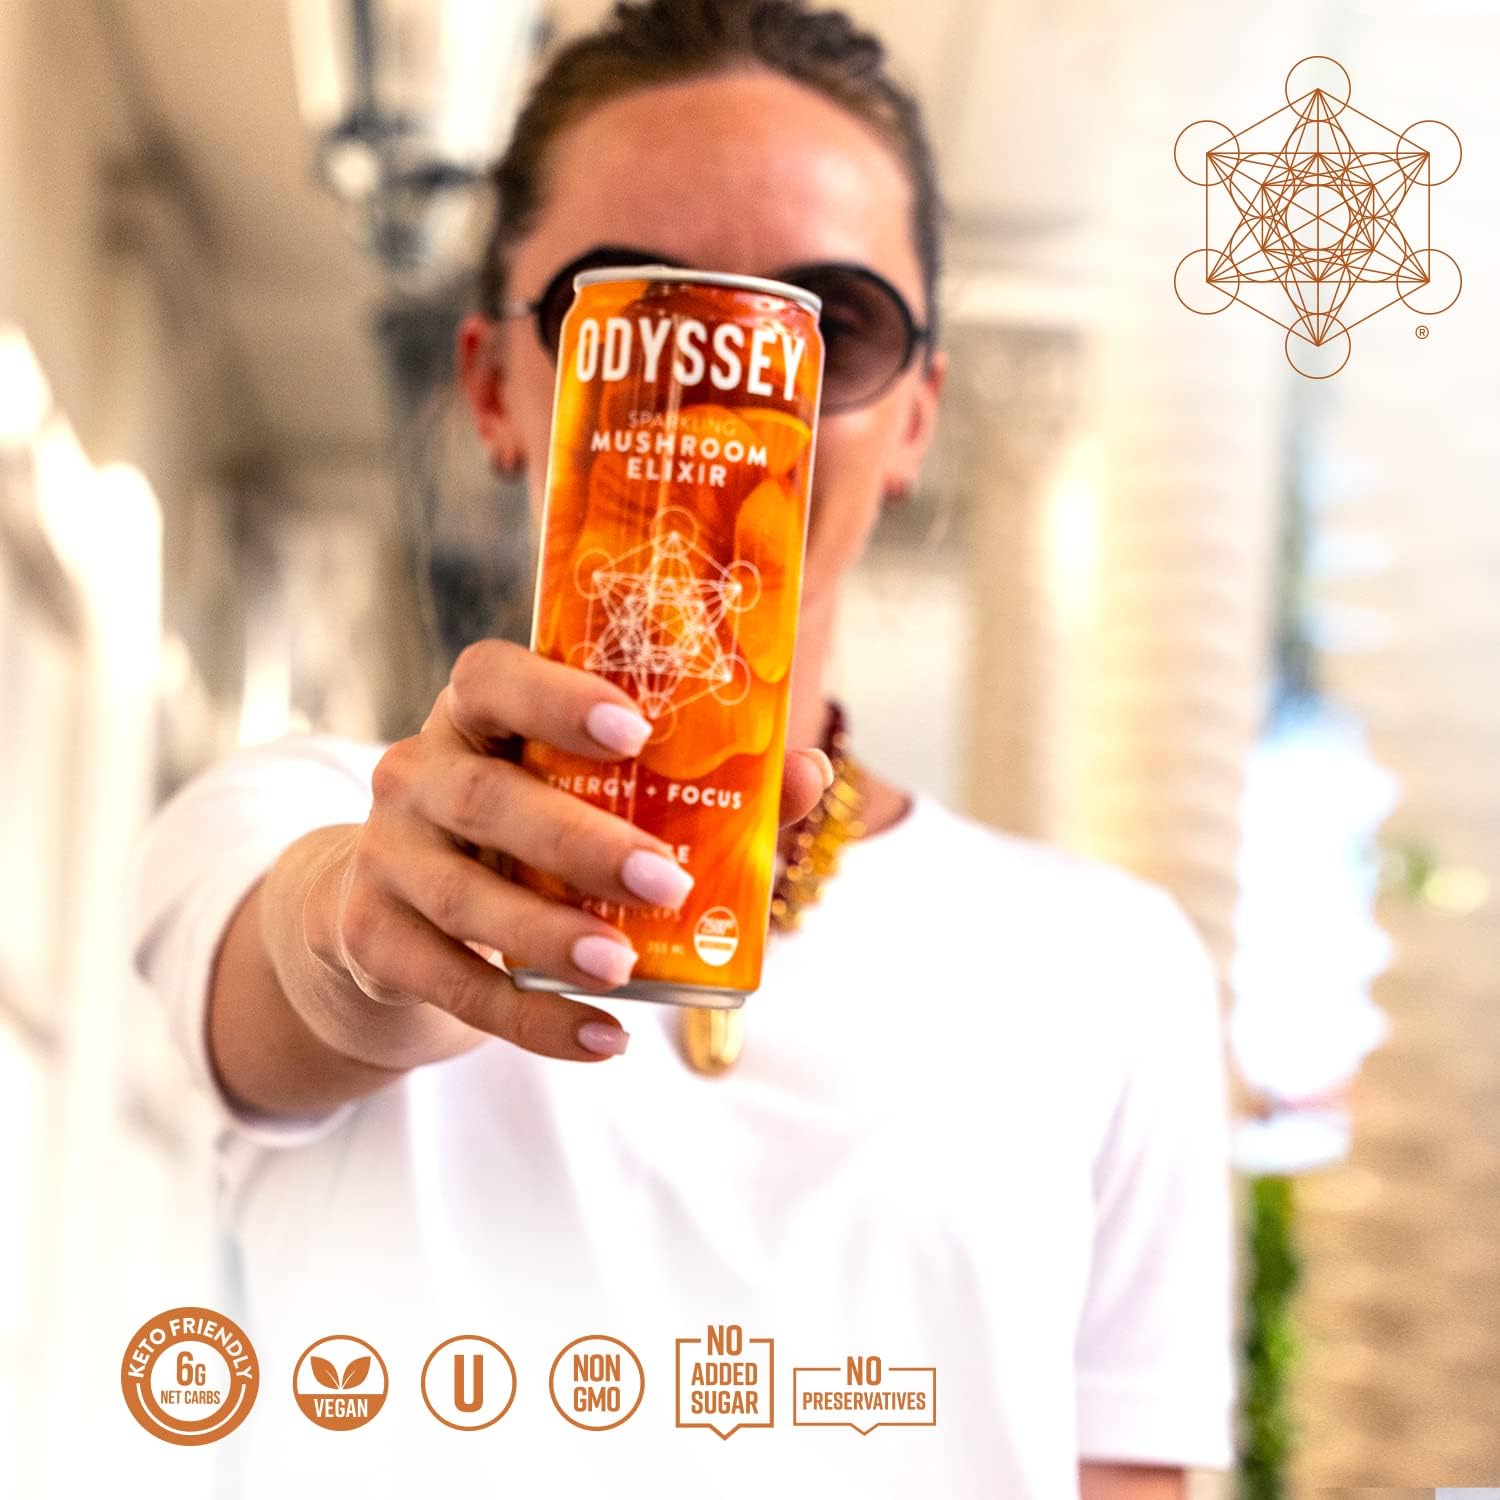 Odyssey Mushroom Elixir: Orange Ginger Energy Drink